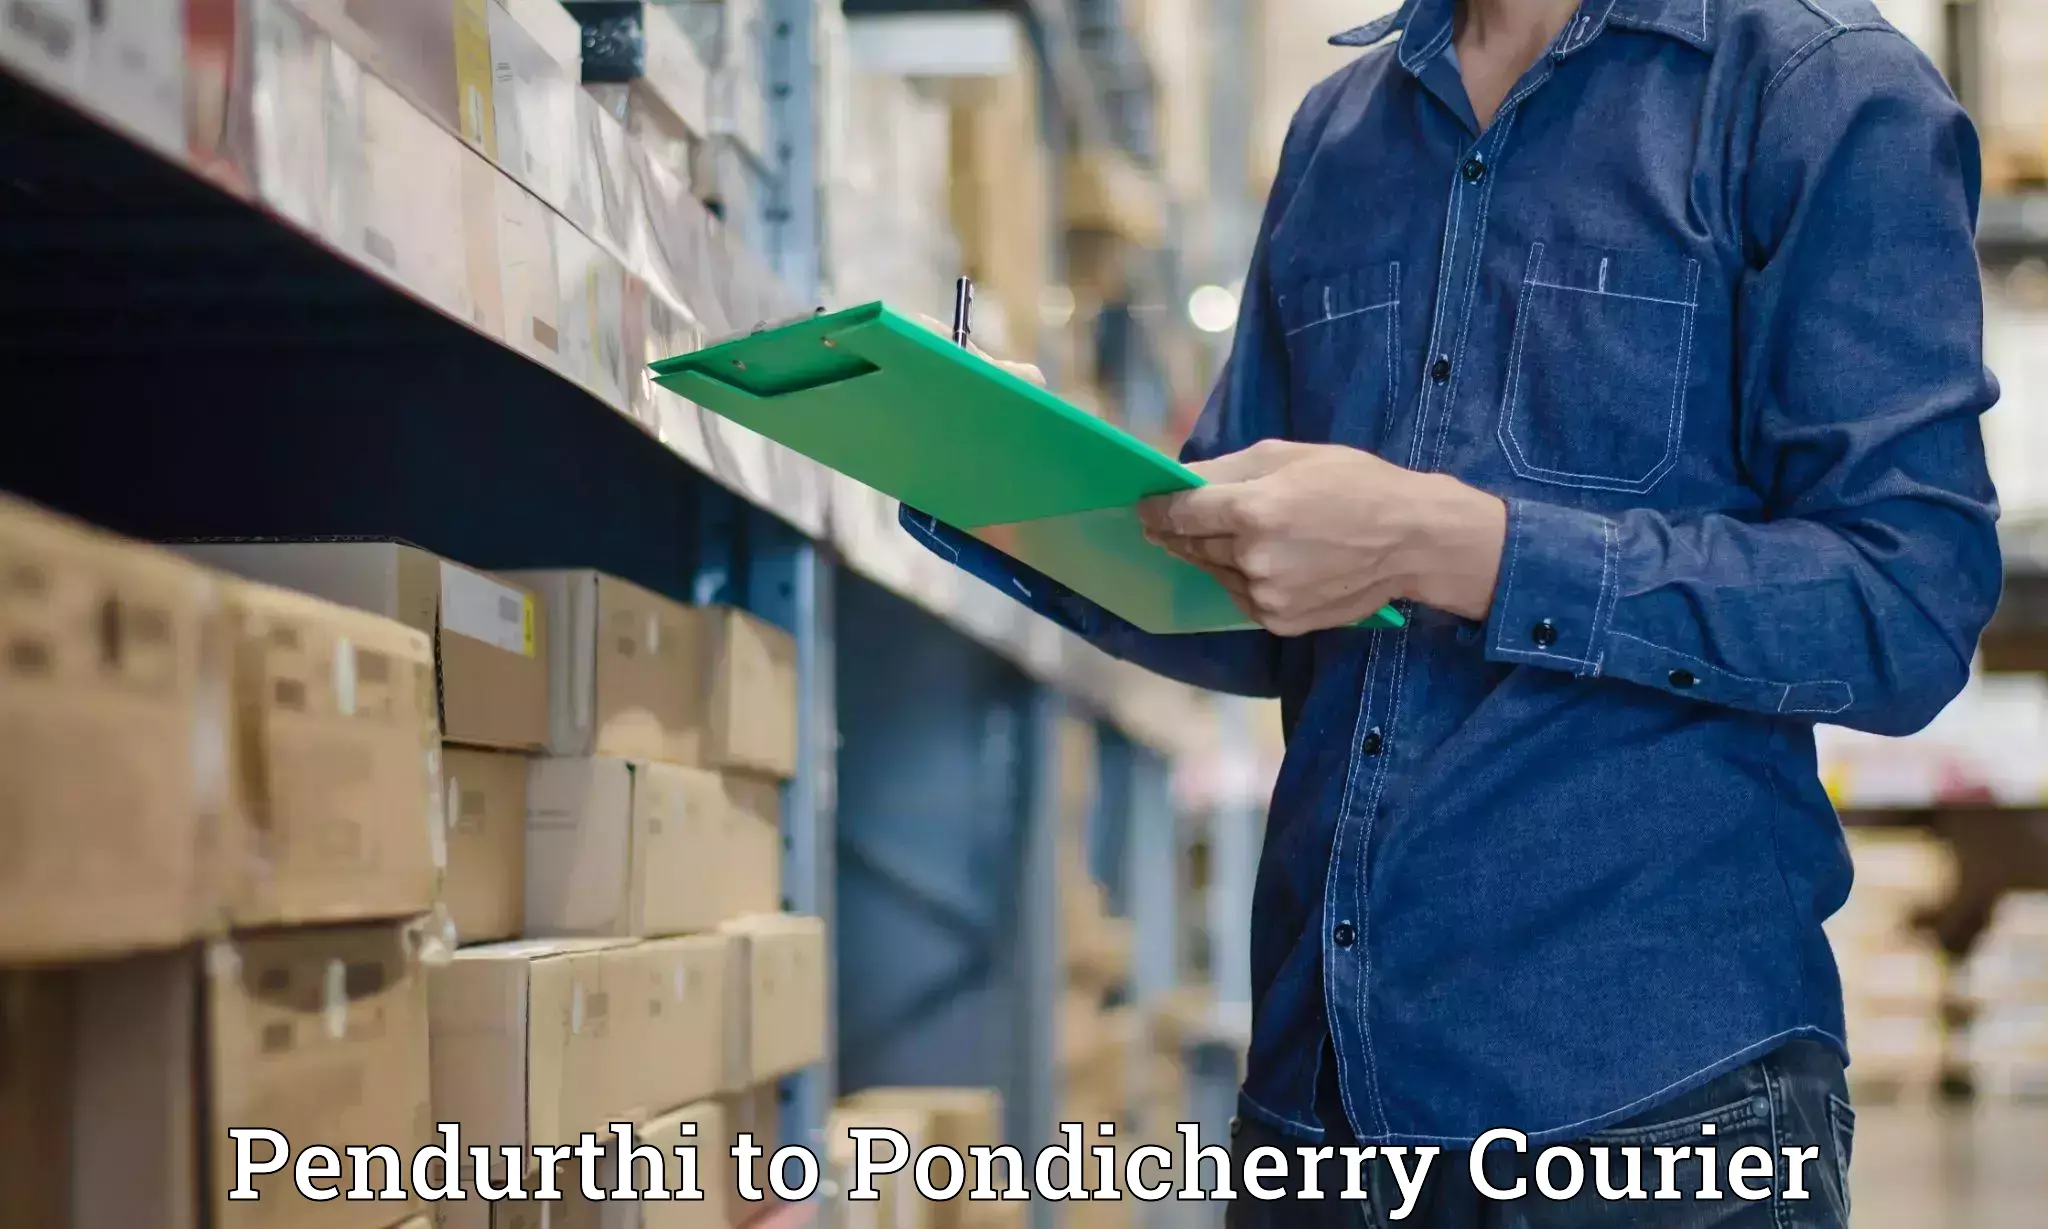 Efficient shipping platforms Pendurthi to Pondicherry